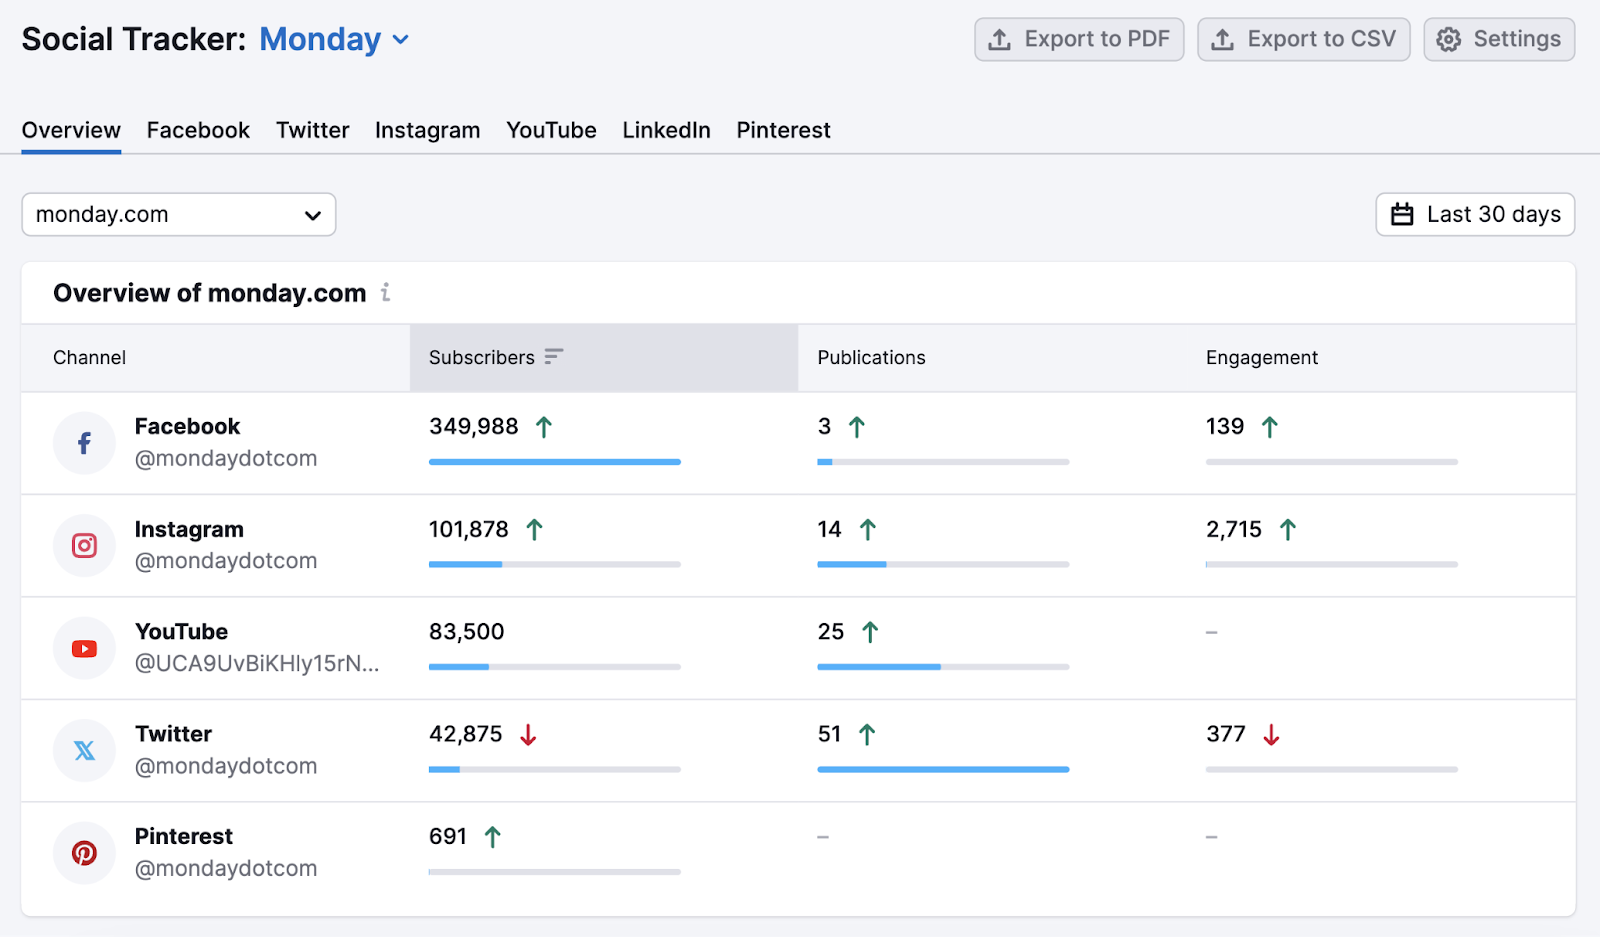 Social media overview dashboard for monday.com successful  Semrush Social Tracker